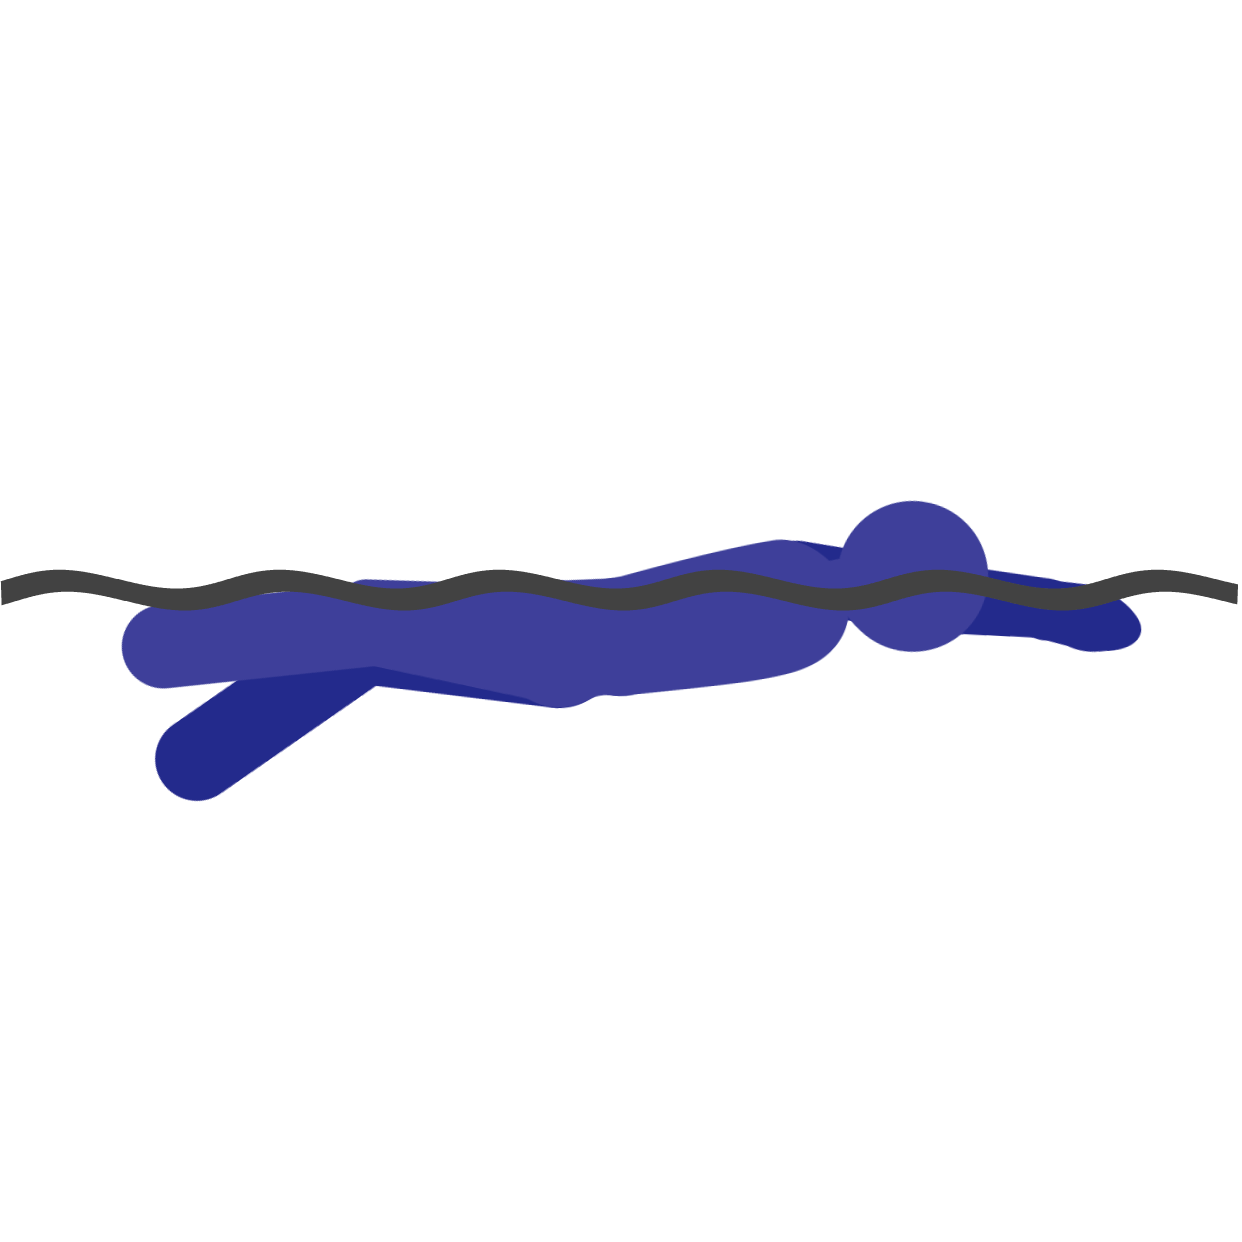 backstroke-animated-fit-drills-exercise-illustration